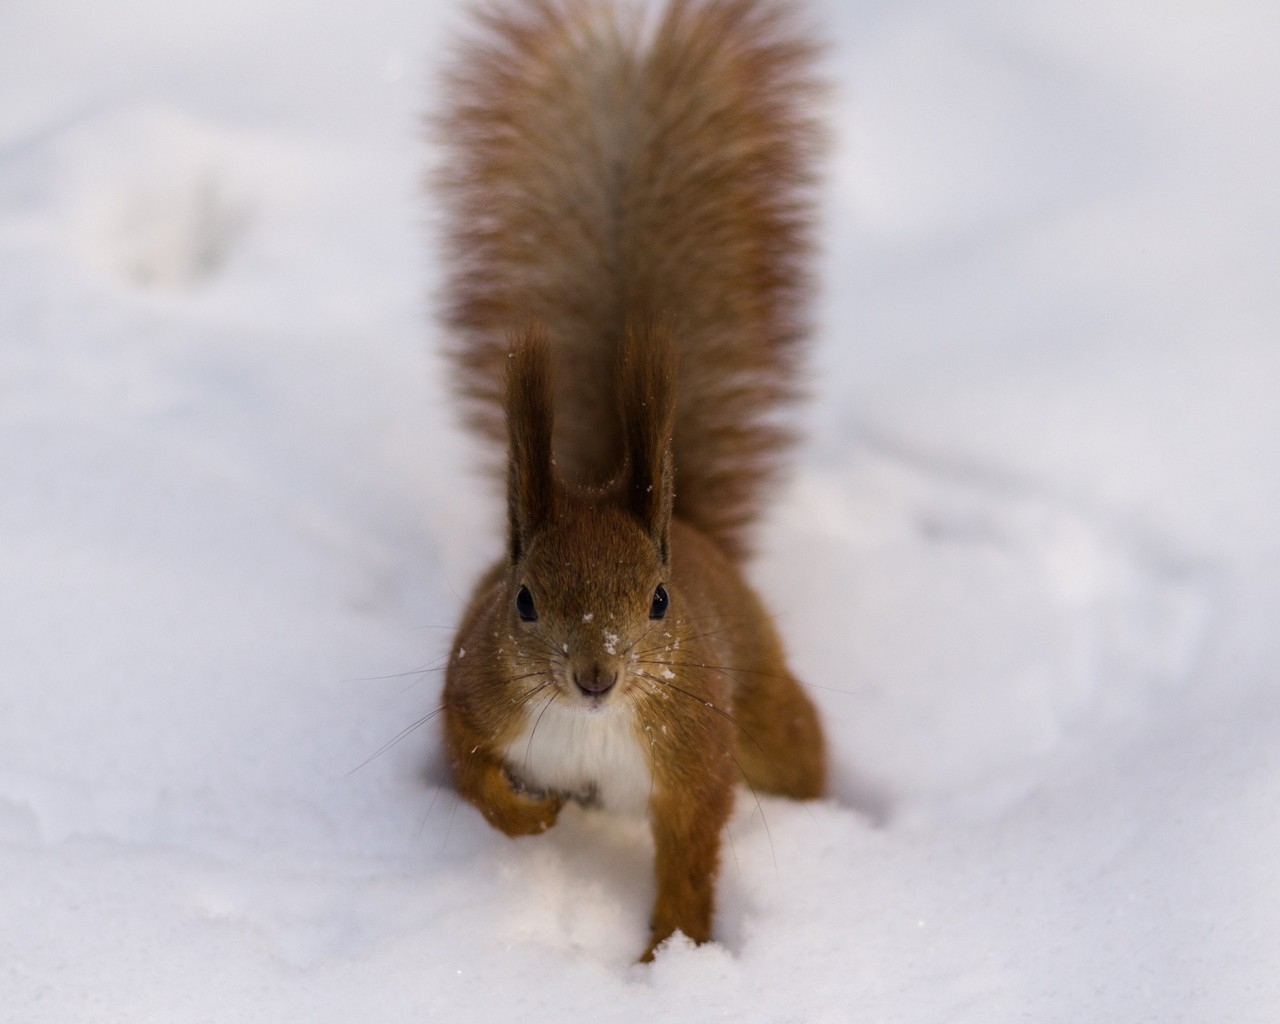 Fluffy Squirrel for 1280 x 1024 resolution